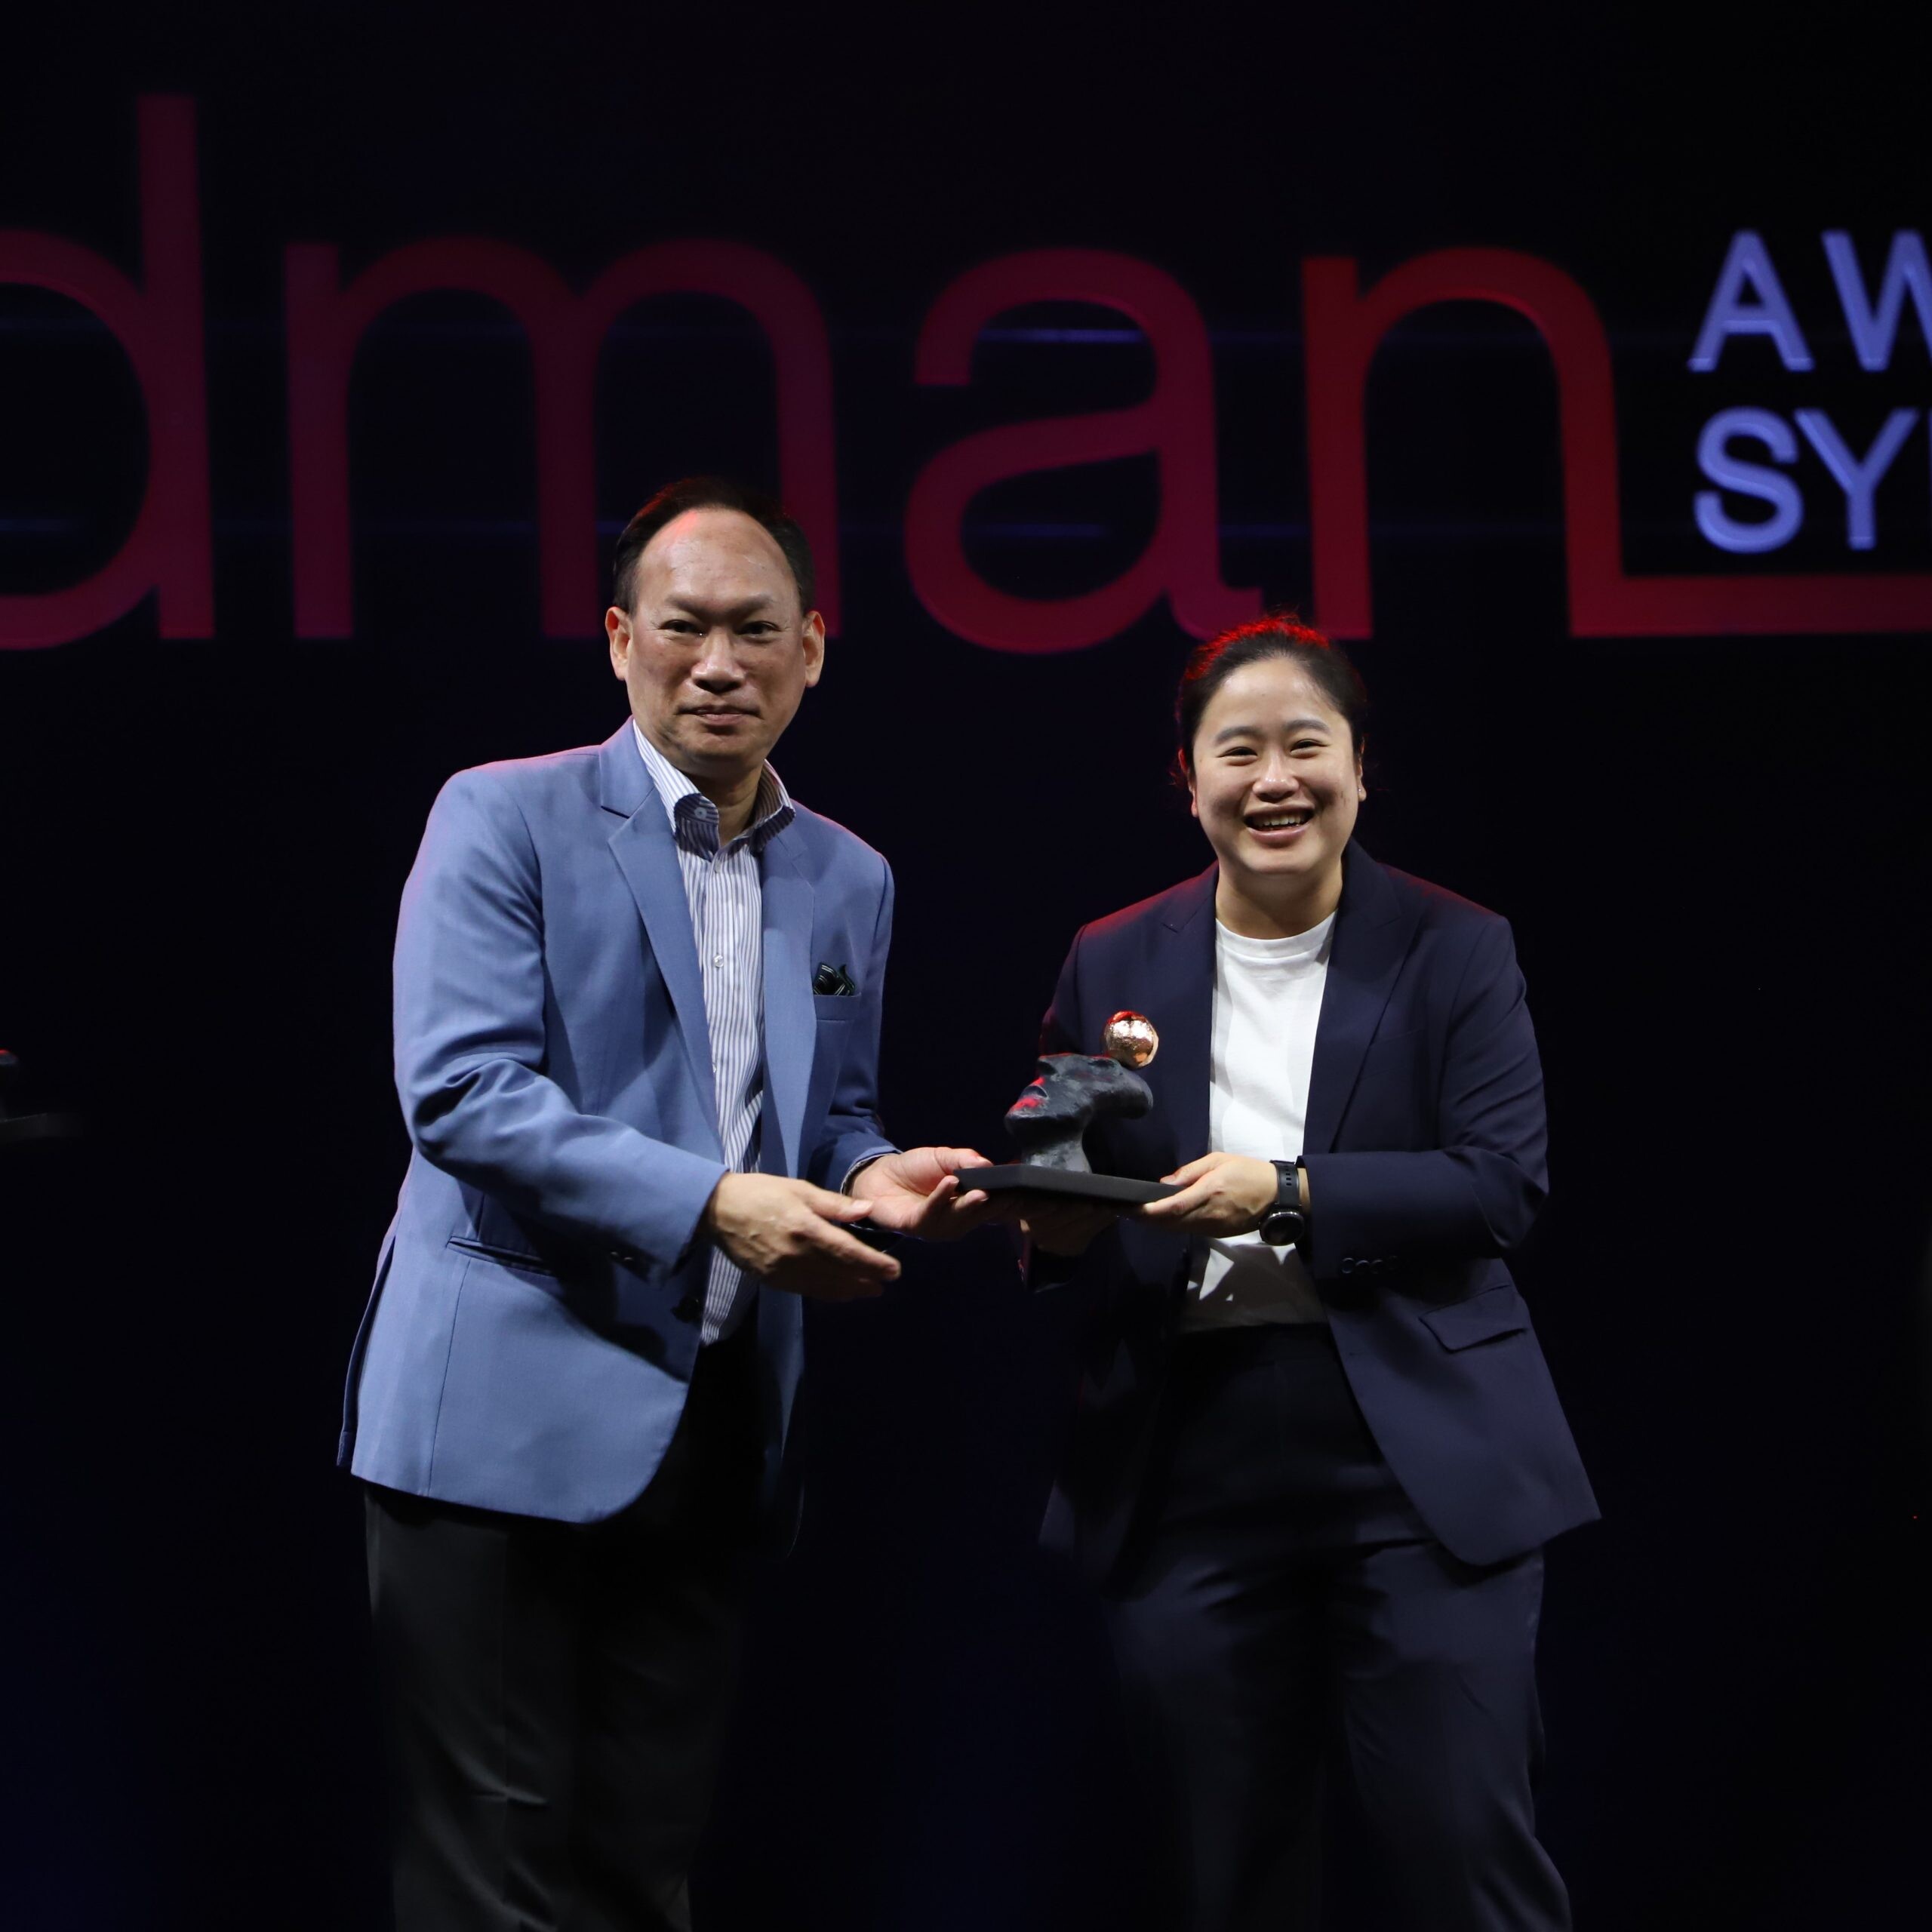 VGI ควงแขน SOUR Bangkok ปลุกกระแสสื่อ DOOH ในไทย พาแคมเปญ "Whoscall The Safety Station" กวาด 12 รางวัล สื่อโฆษณาสุดครีเอทีพ จากเวที Adman Awards &amp; Symposium 2022